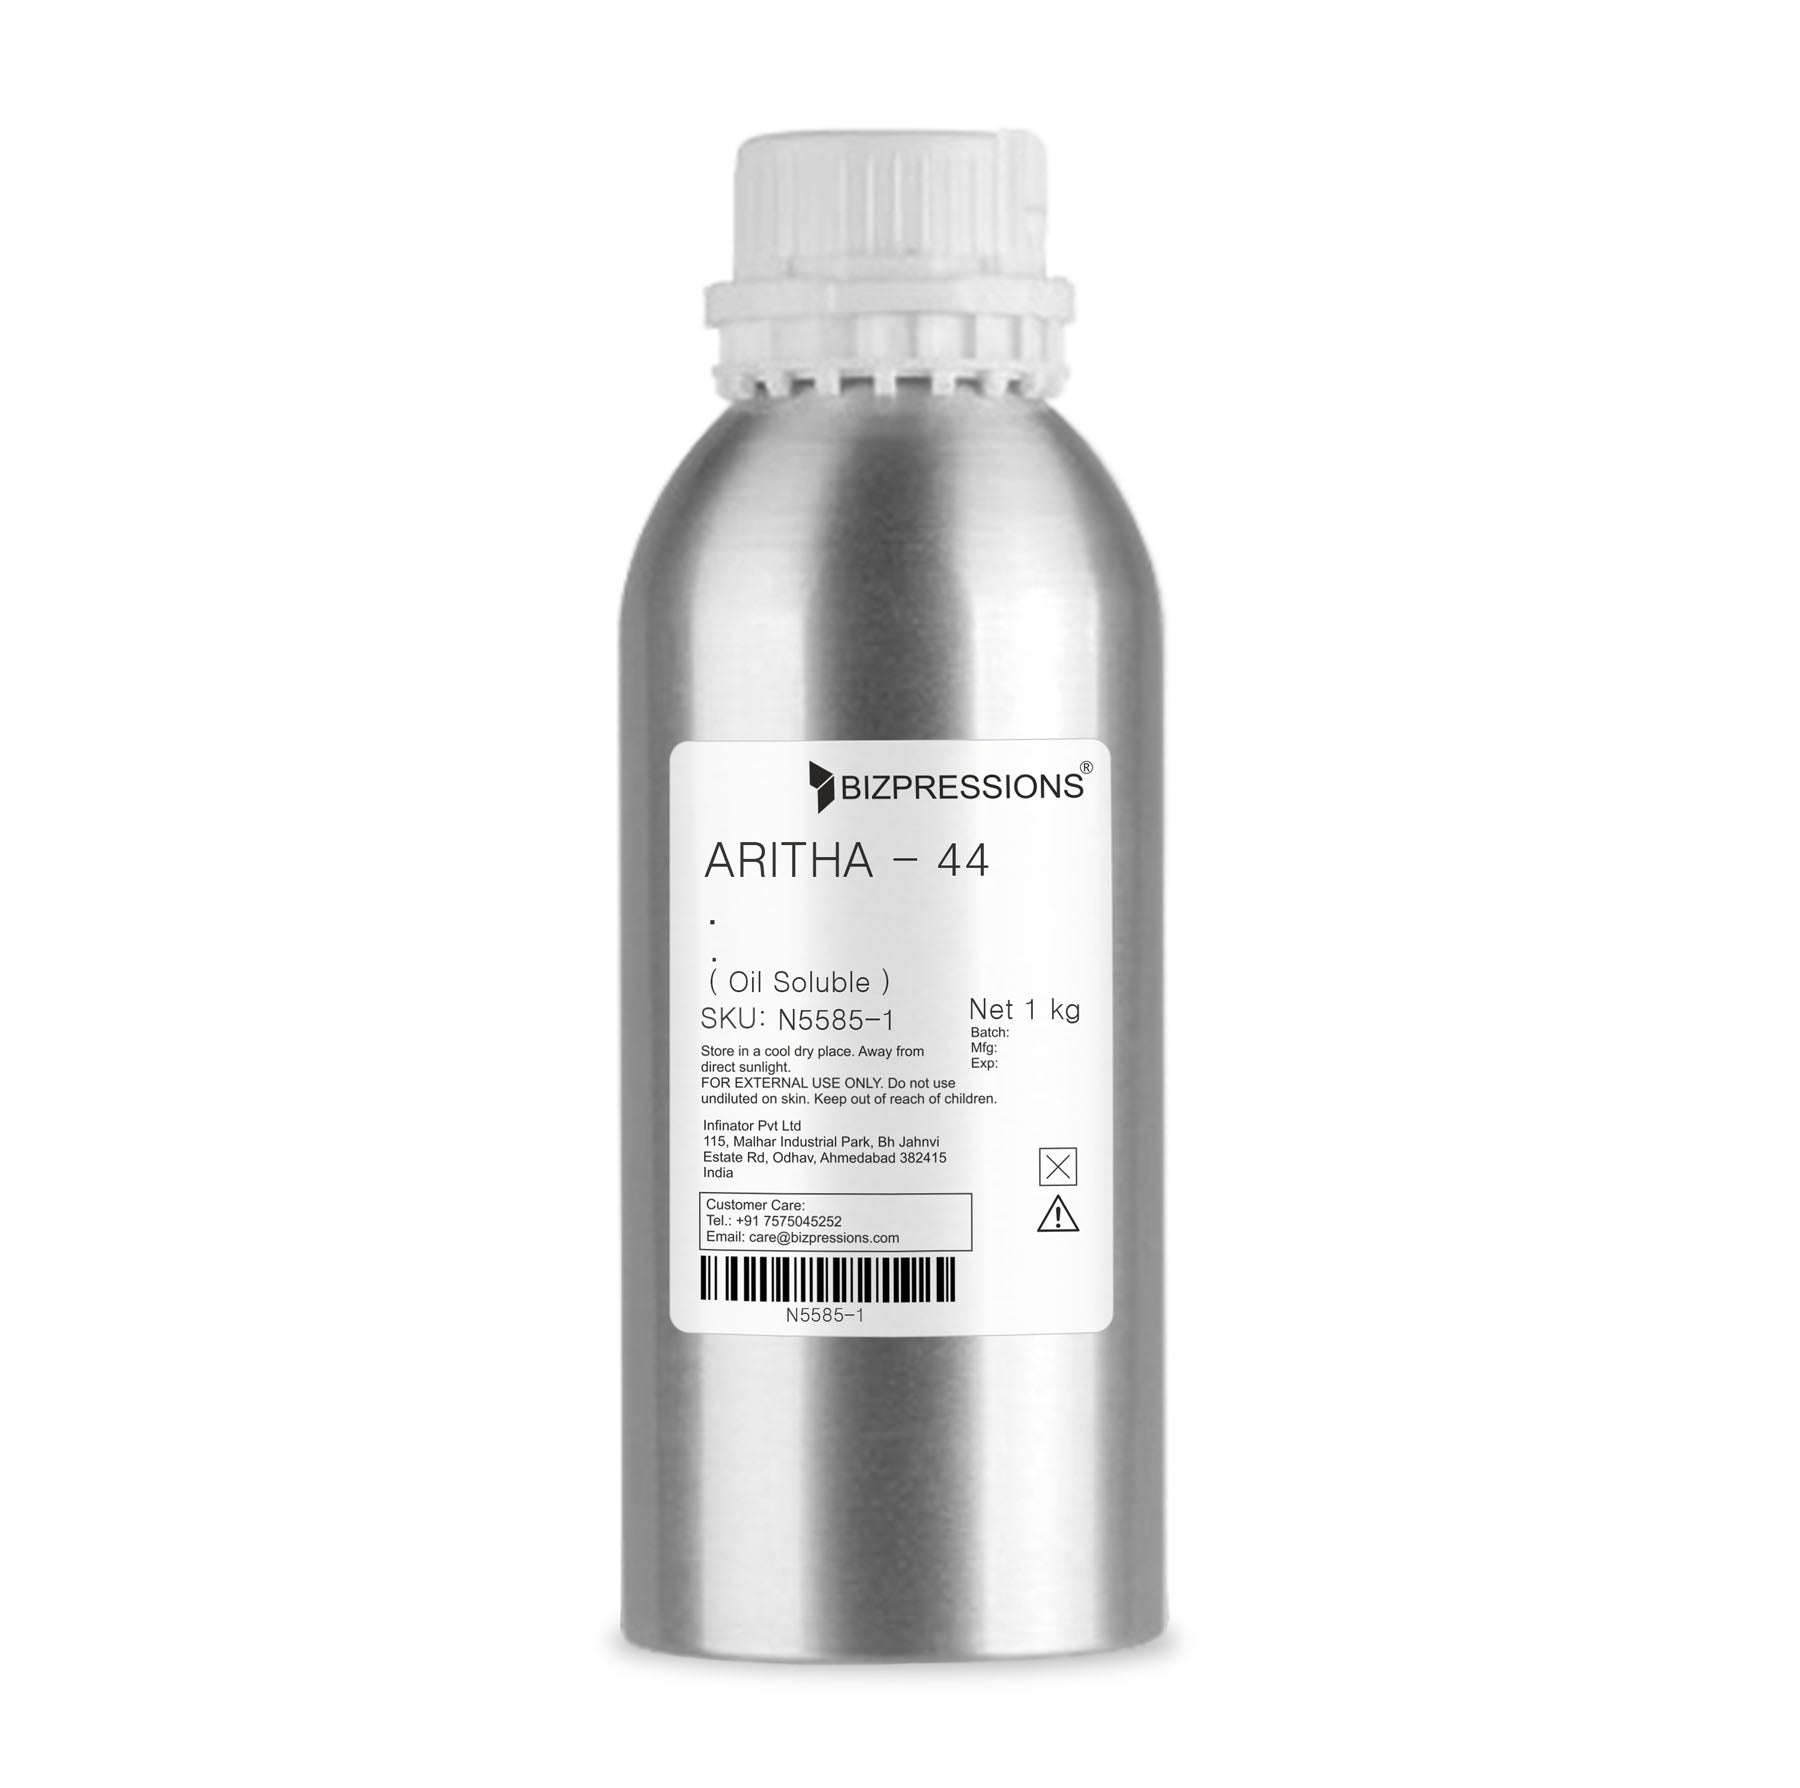 ARITHA - 44 - Fragrance ( Oil Soluble ) - 1 kg